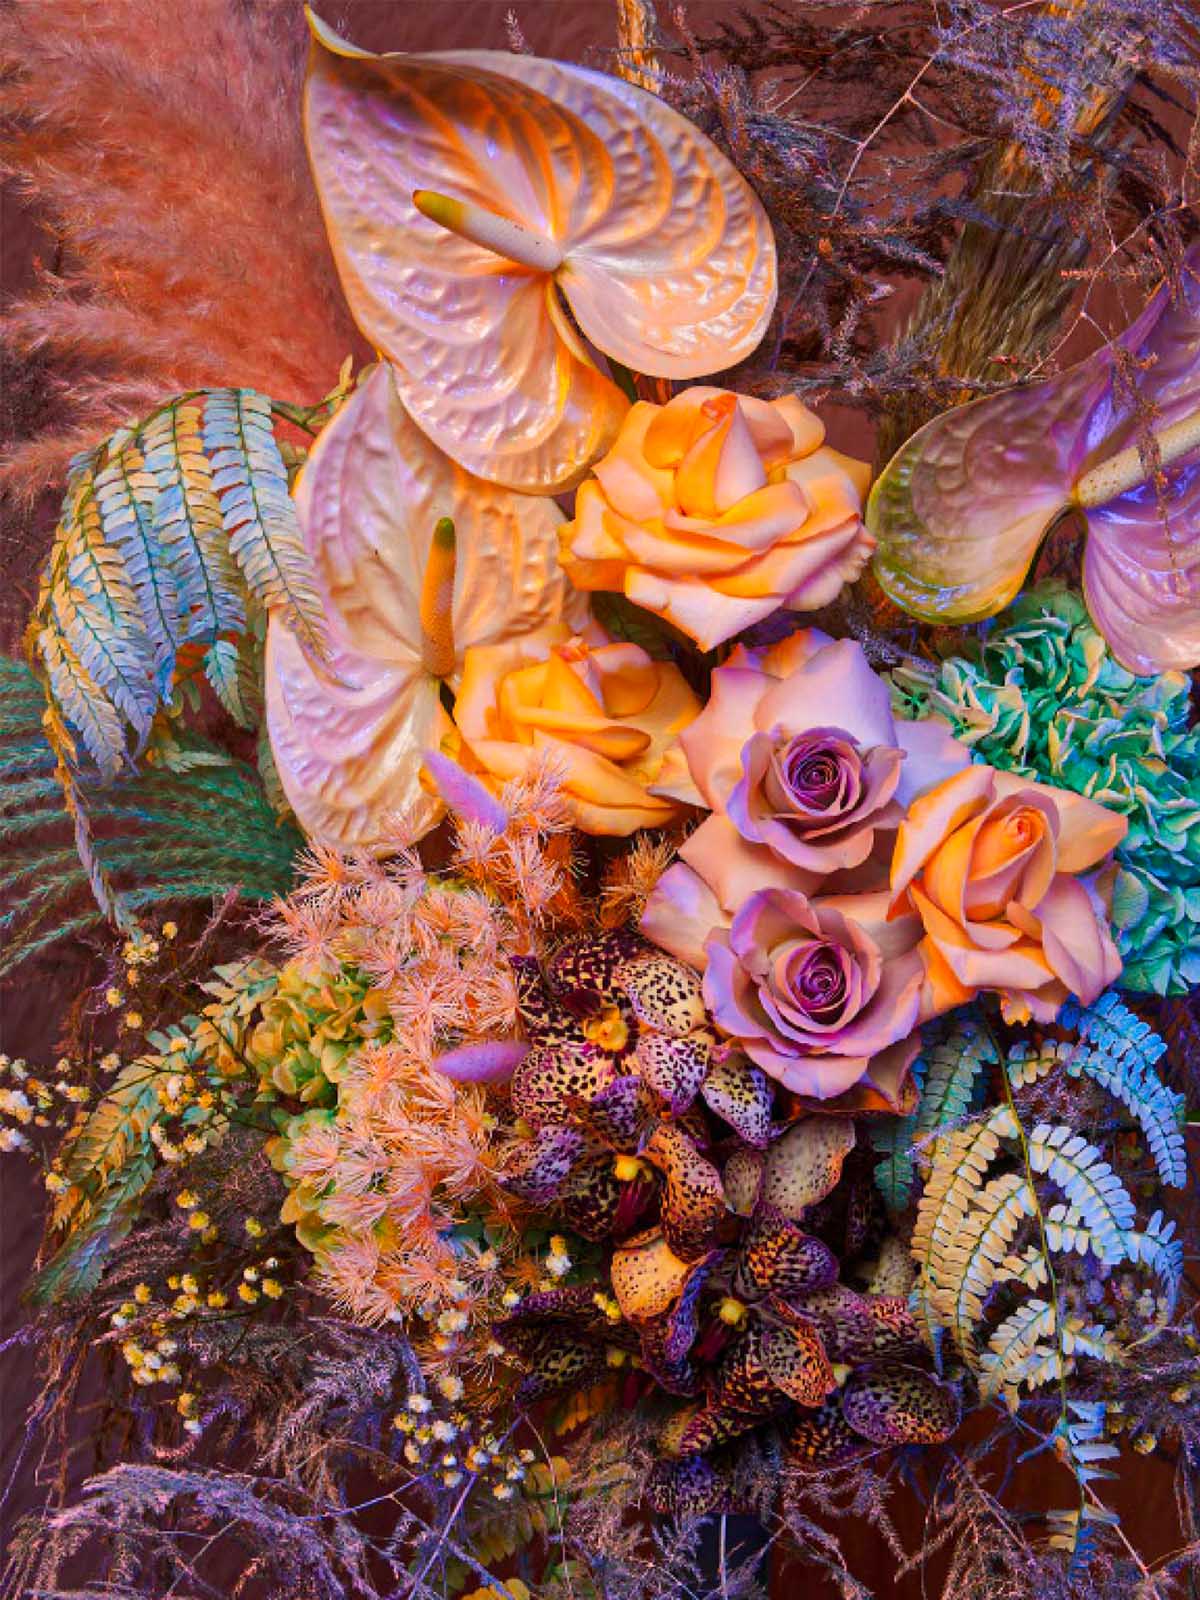 Five artistic Interpretations using fluorescent dried flowers on Thursd